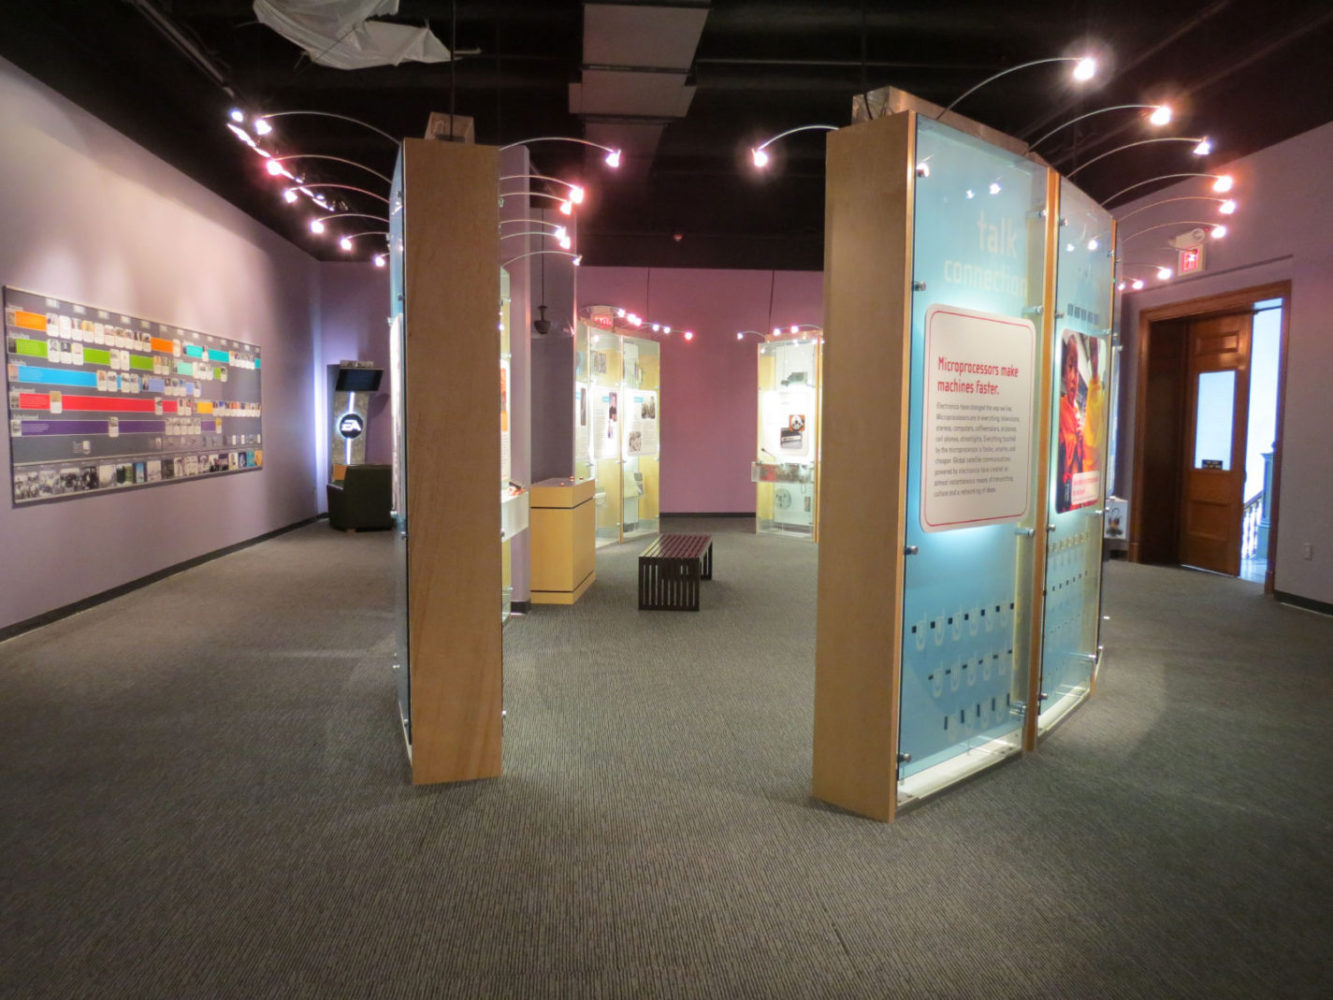 Entrepreneurs exhibit at San Mateo County History Museum